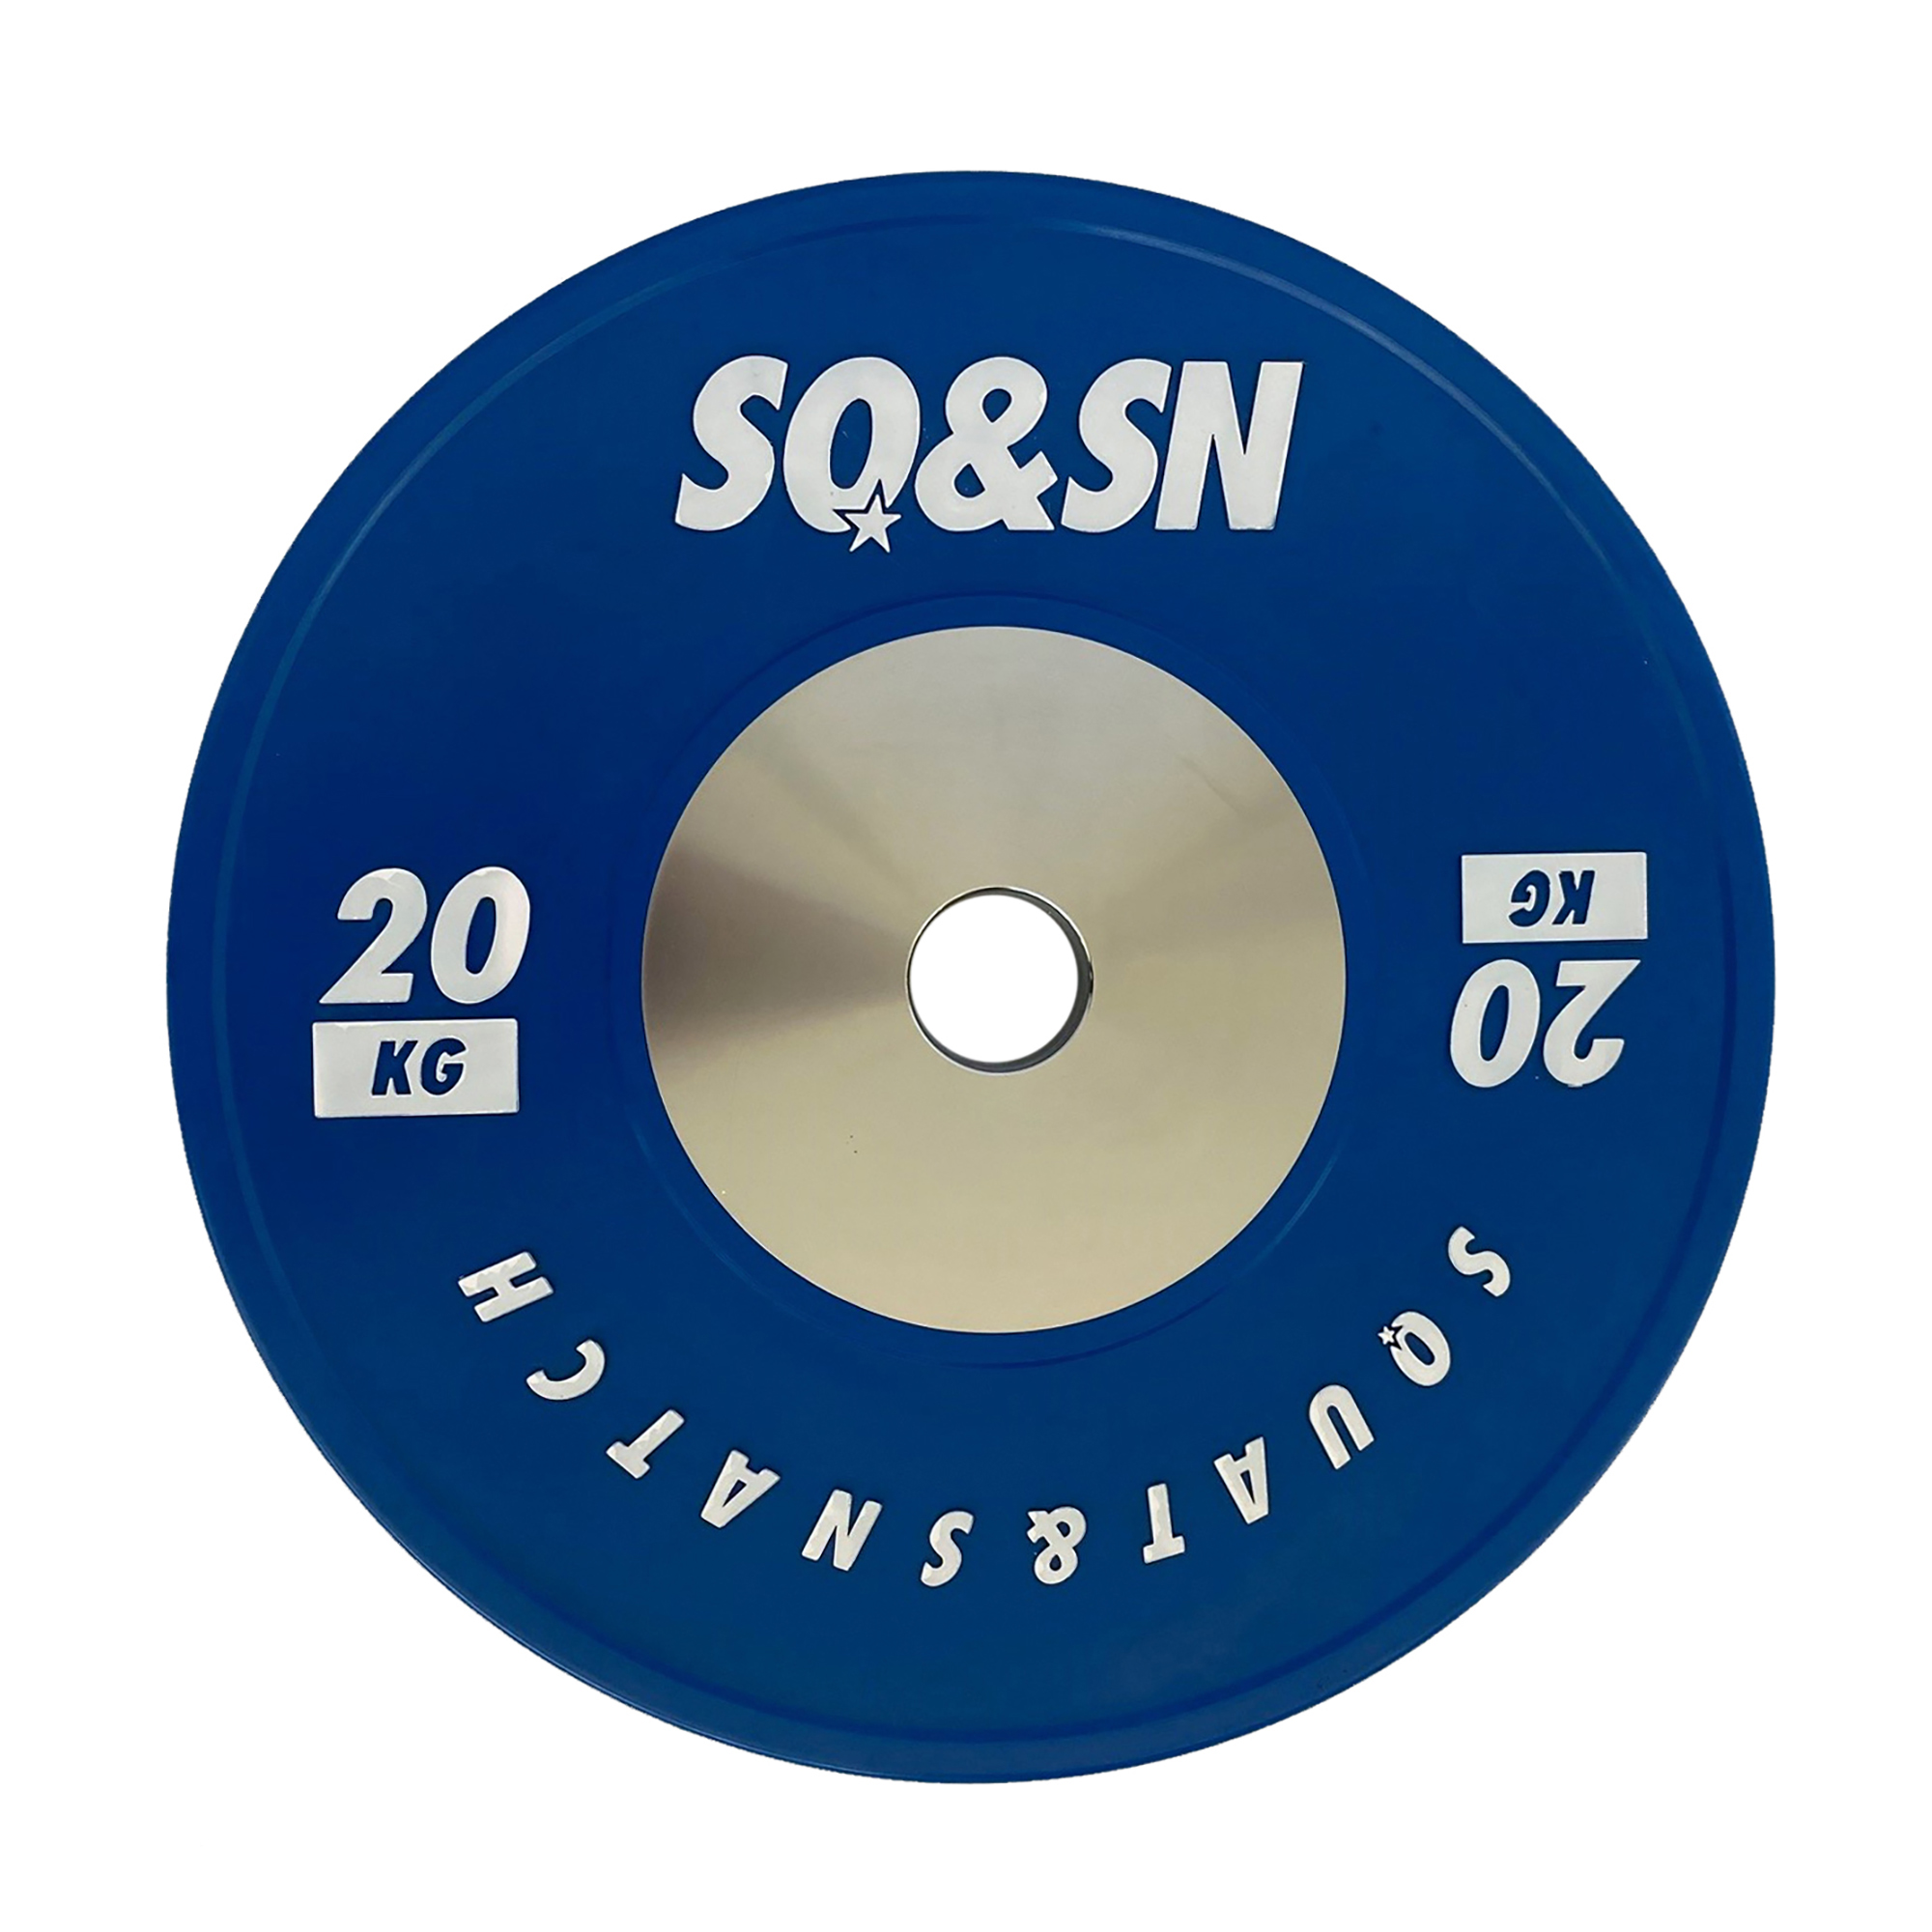 SQ&SN Competition Bumper Plate 20 kg Blue - Demo thumbnail